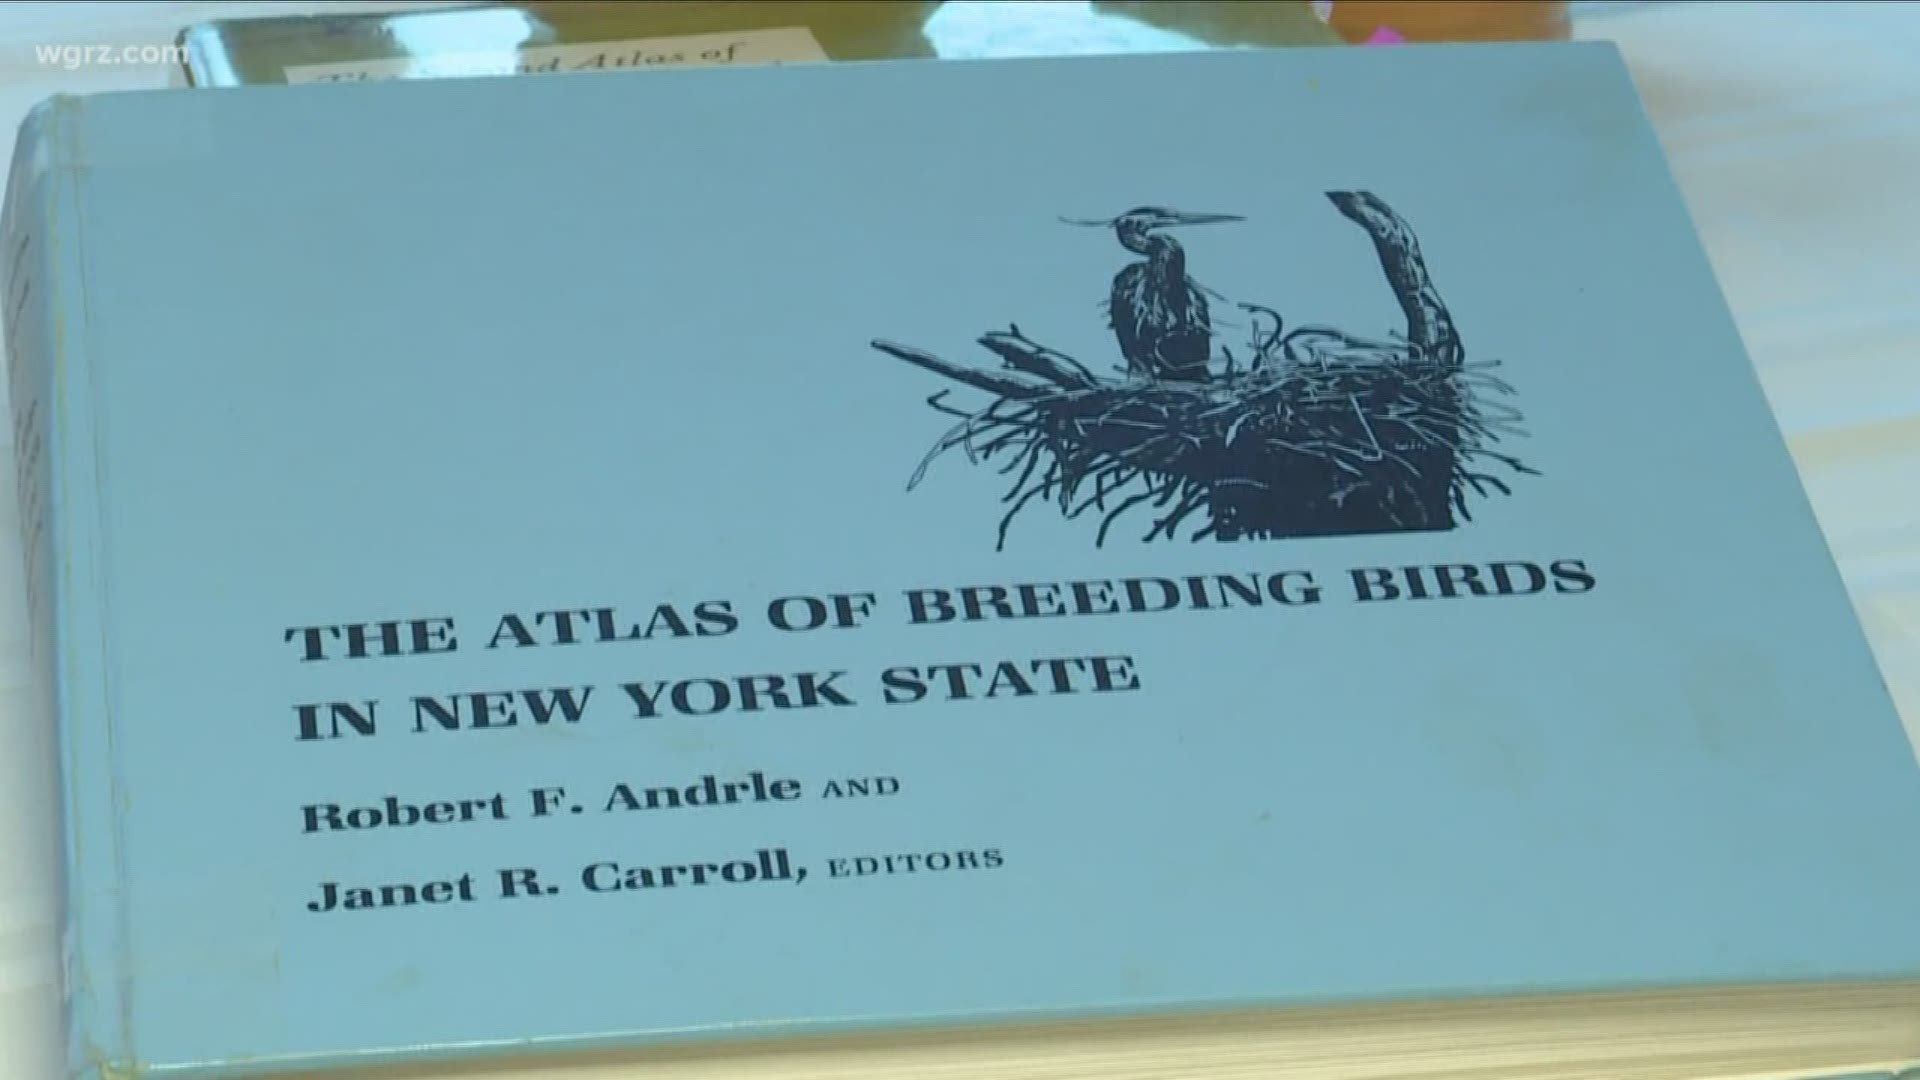 The Bird Atlas is in need of a flock of volunteers